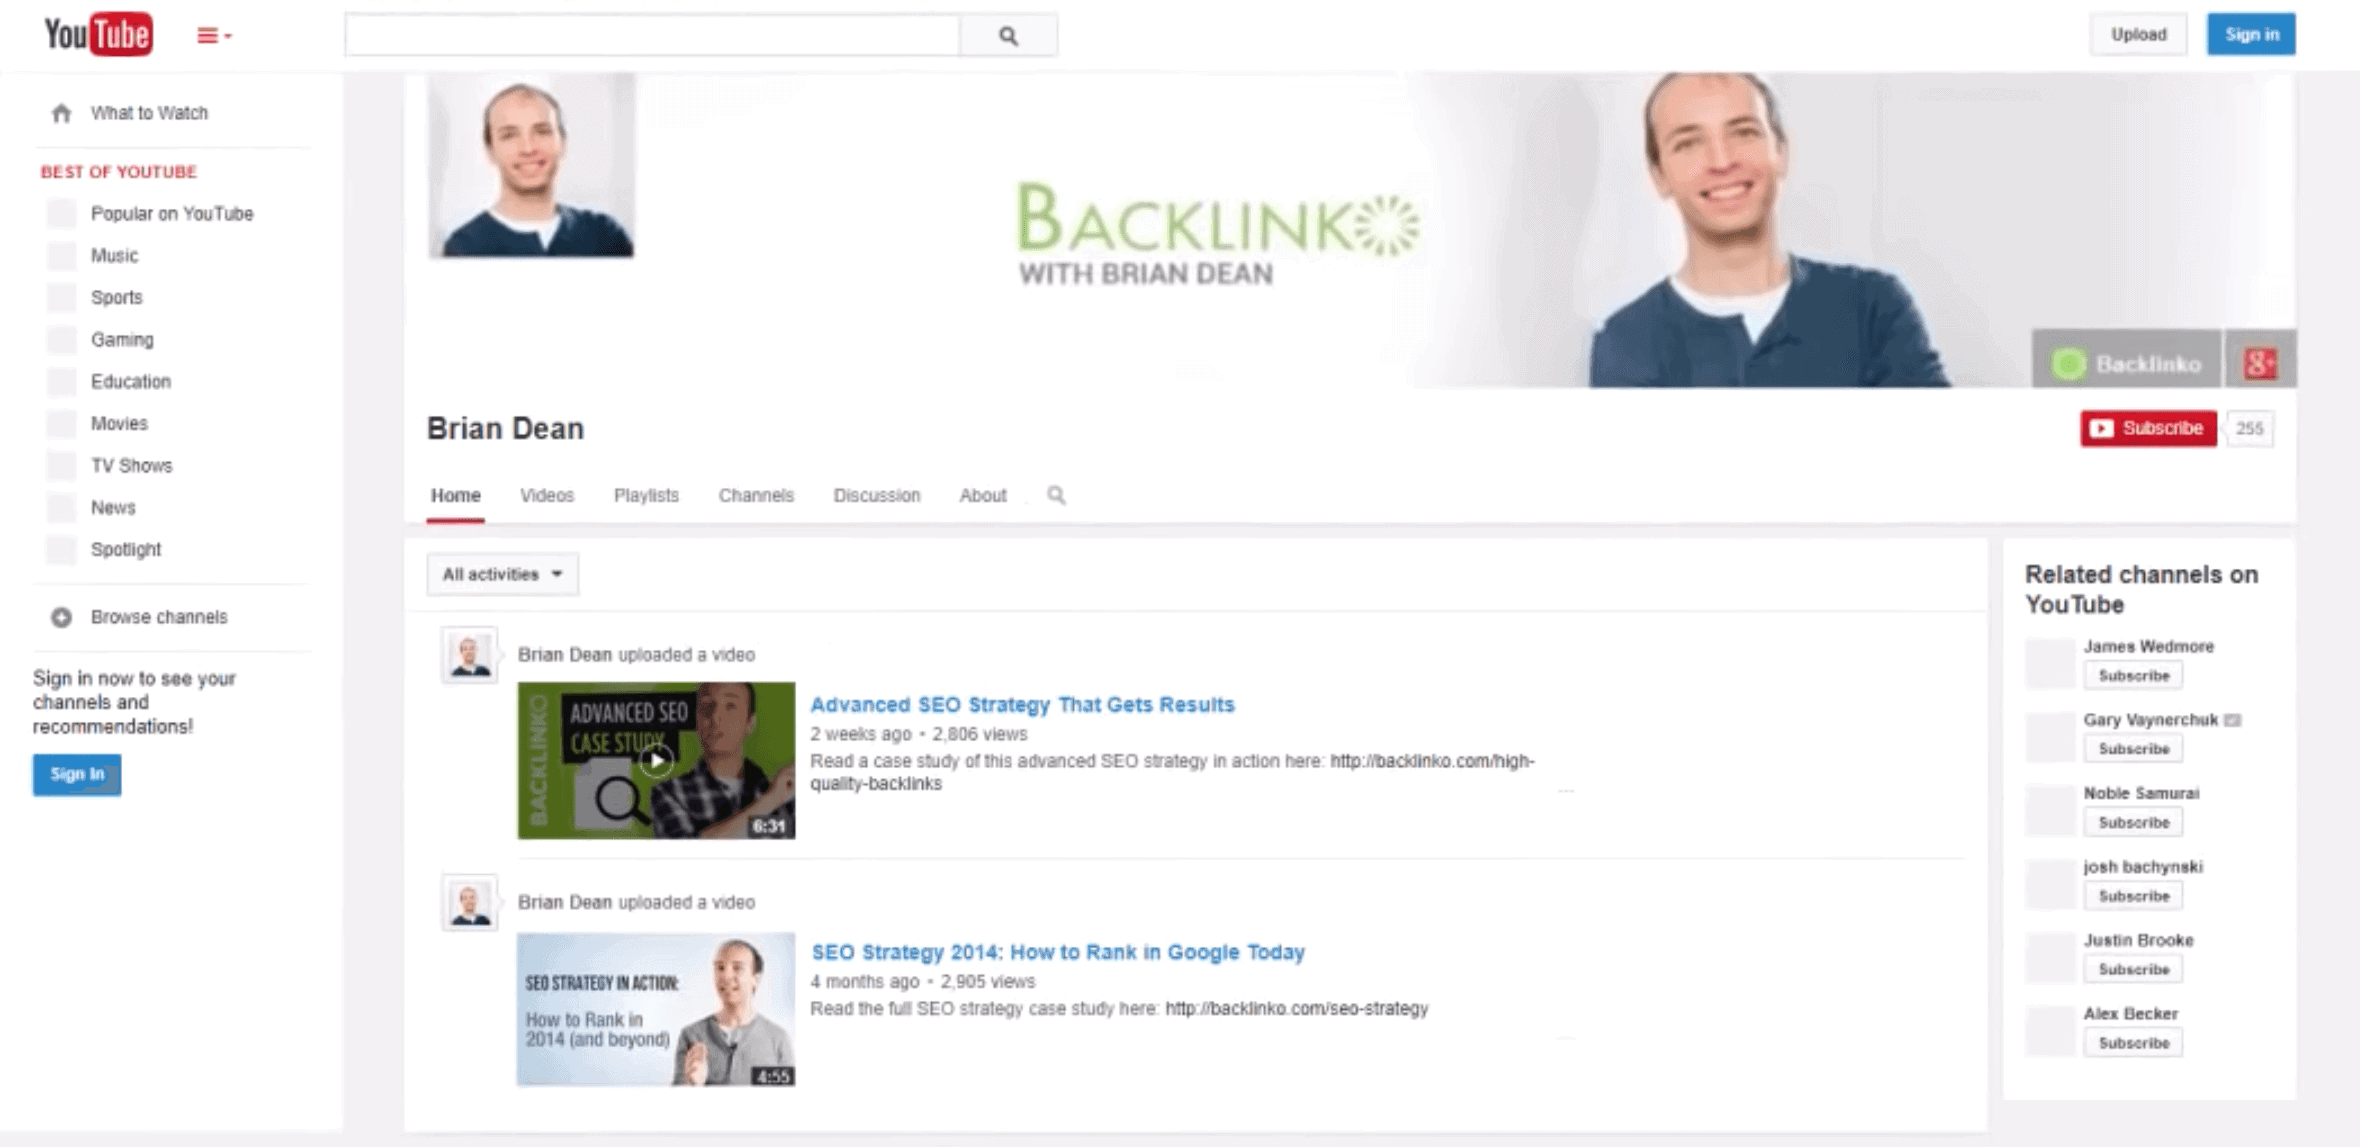 Backlinko – Old YouTube channel